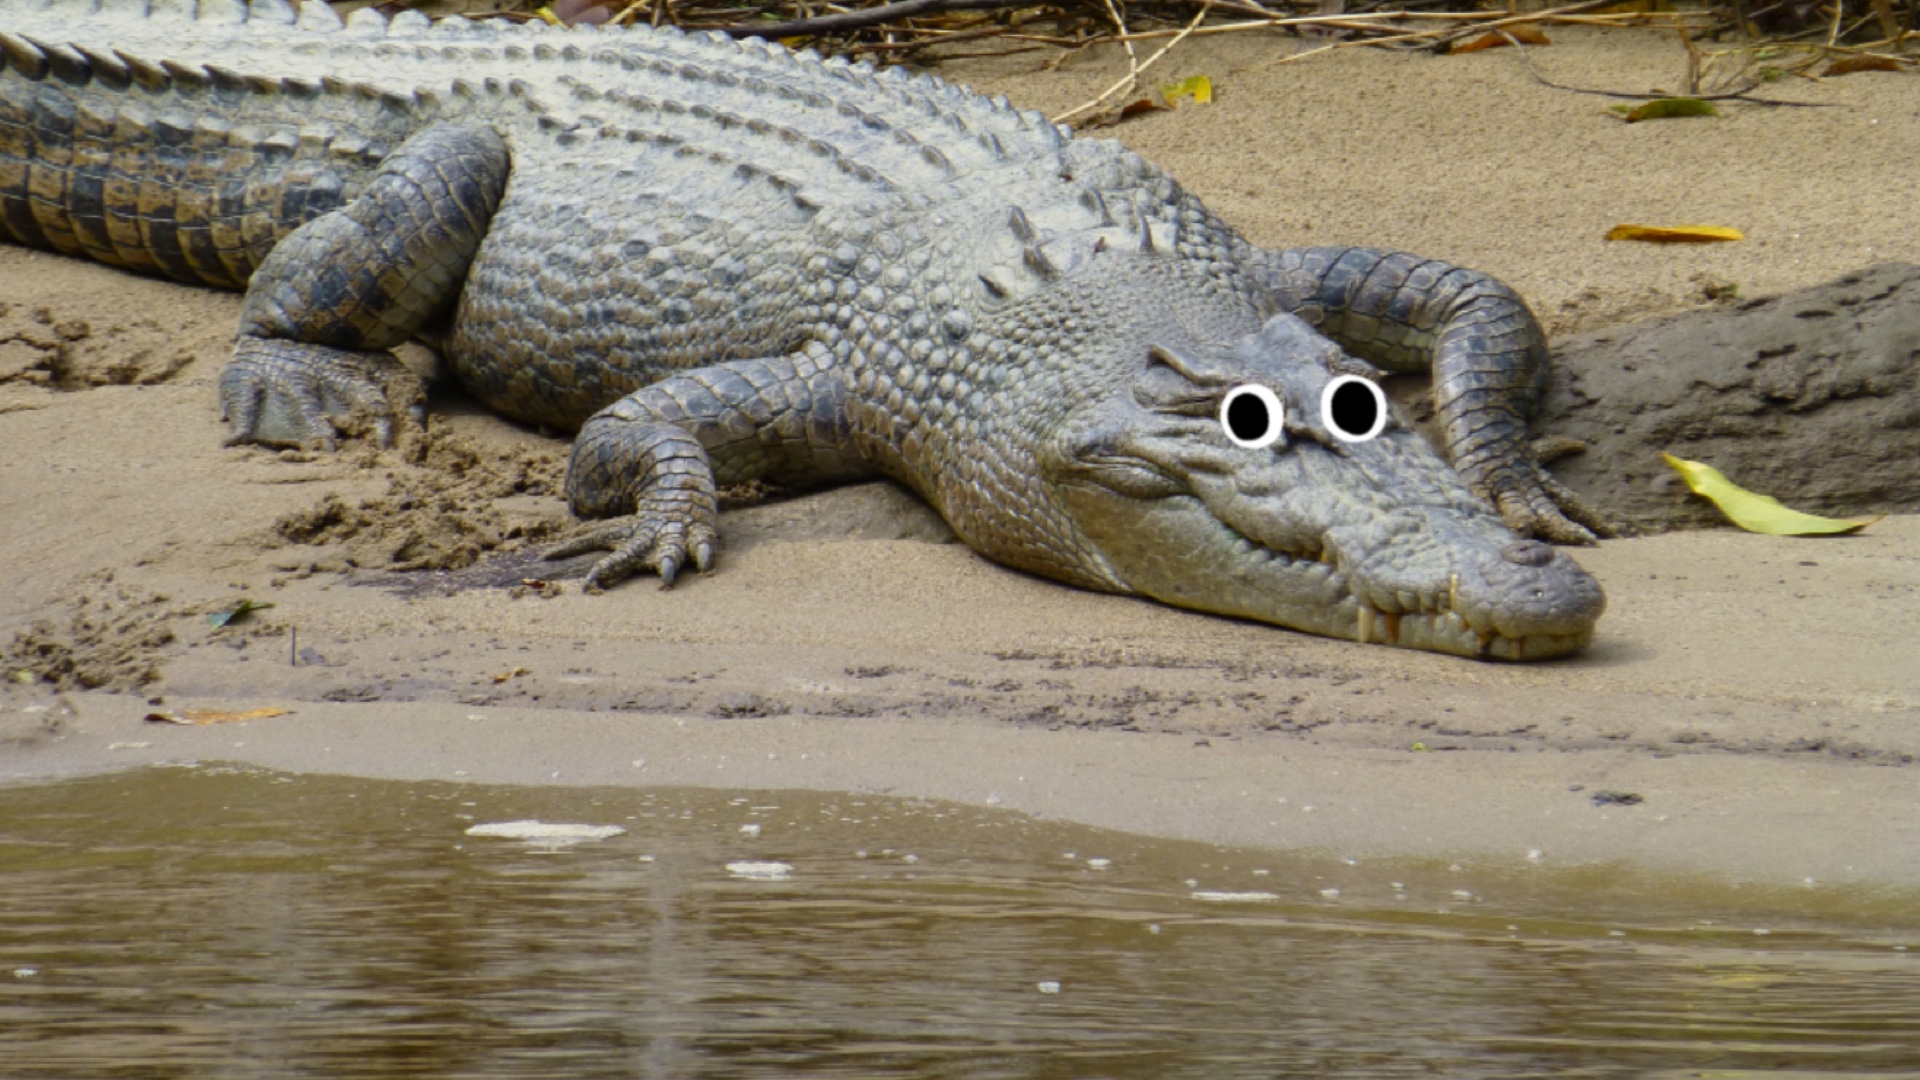 A crocodile on a river bank